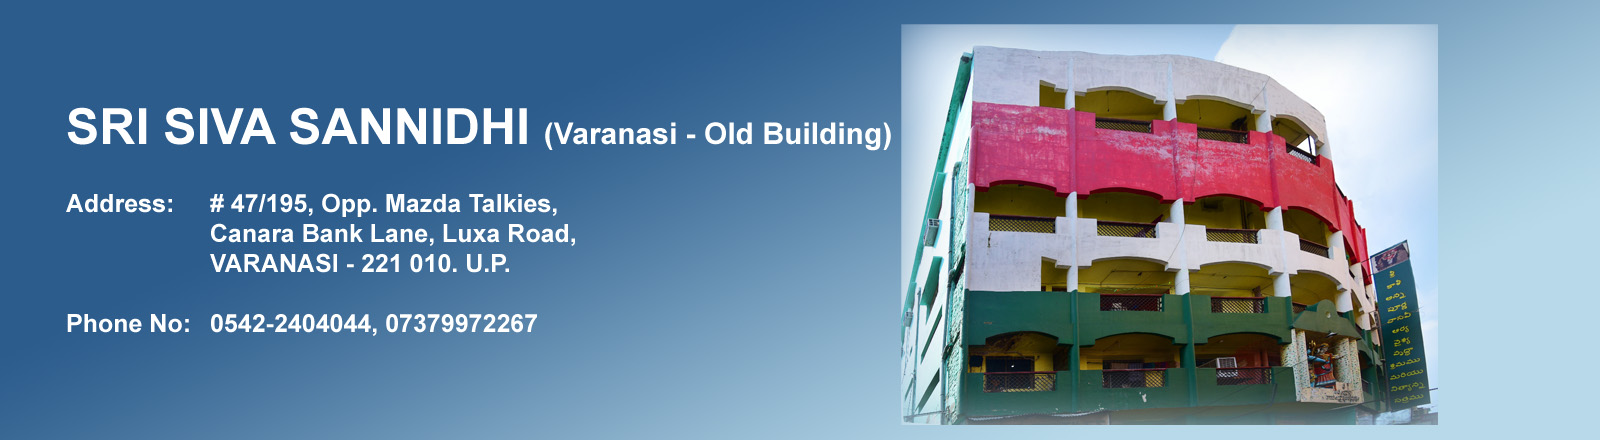 Varanasi Old